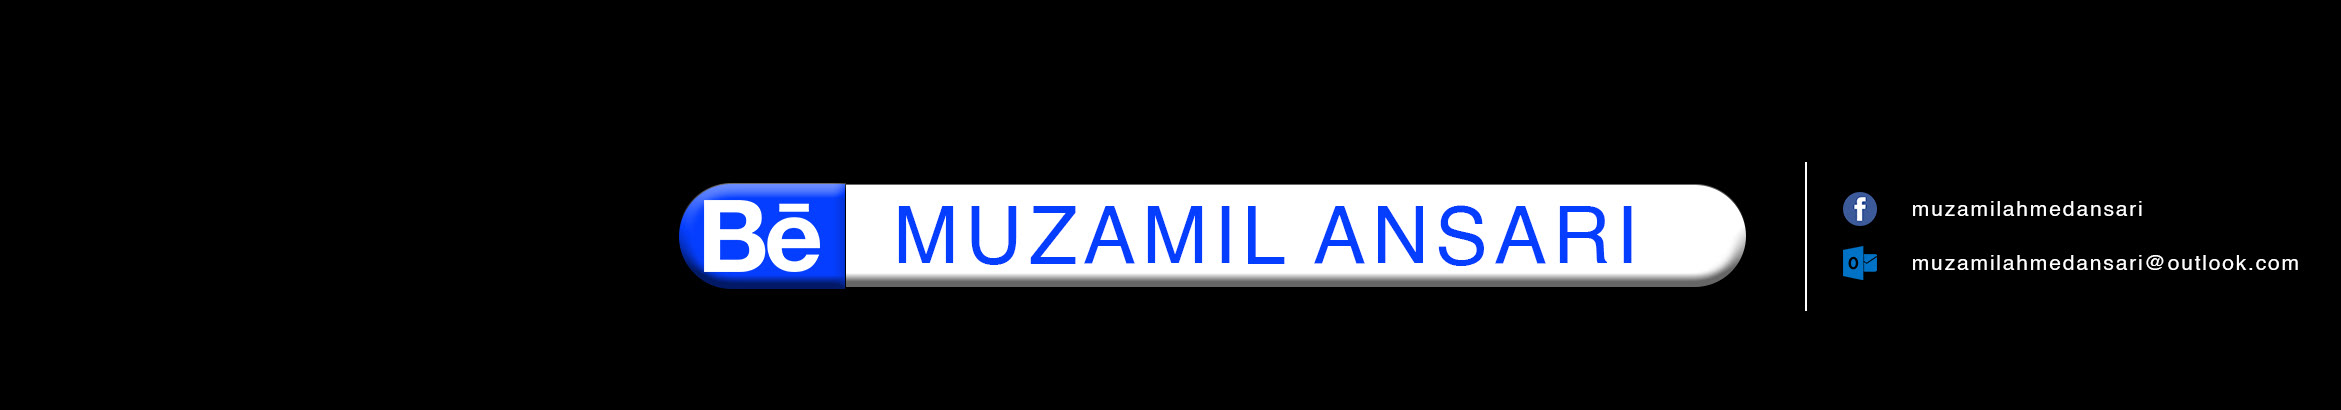 Banner de perfil de Muzamil Ahmed Ansari